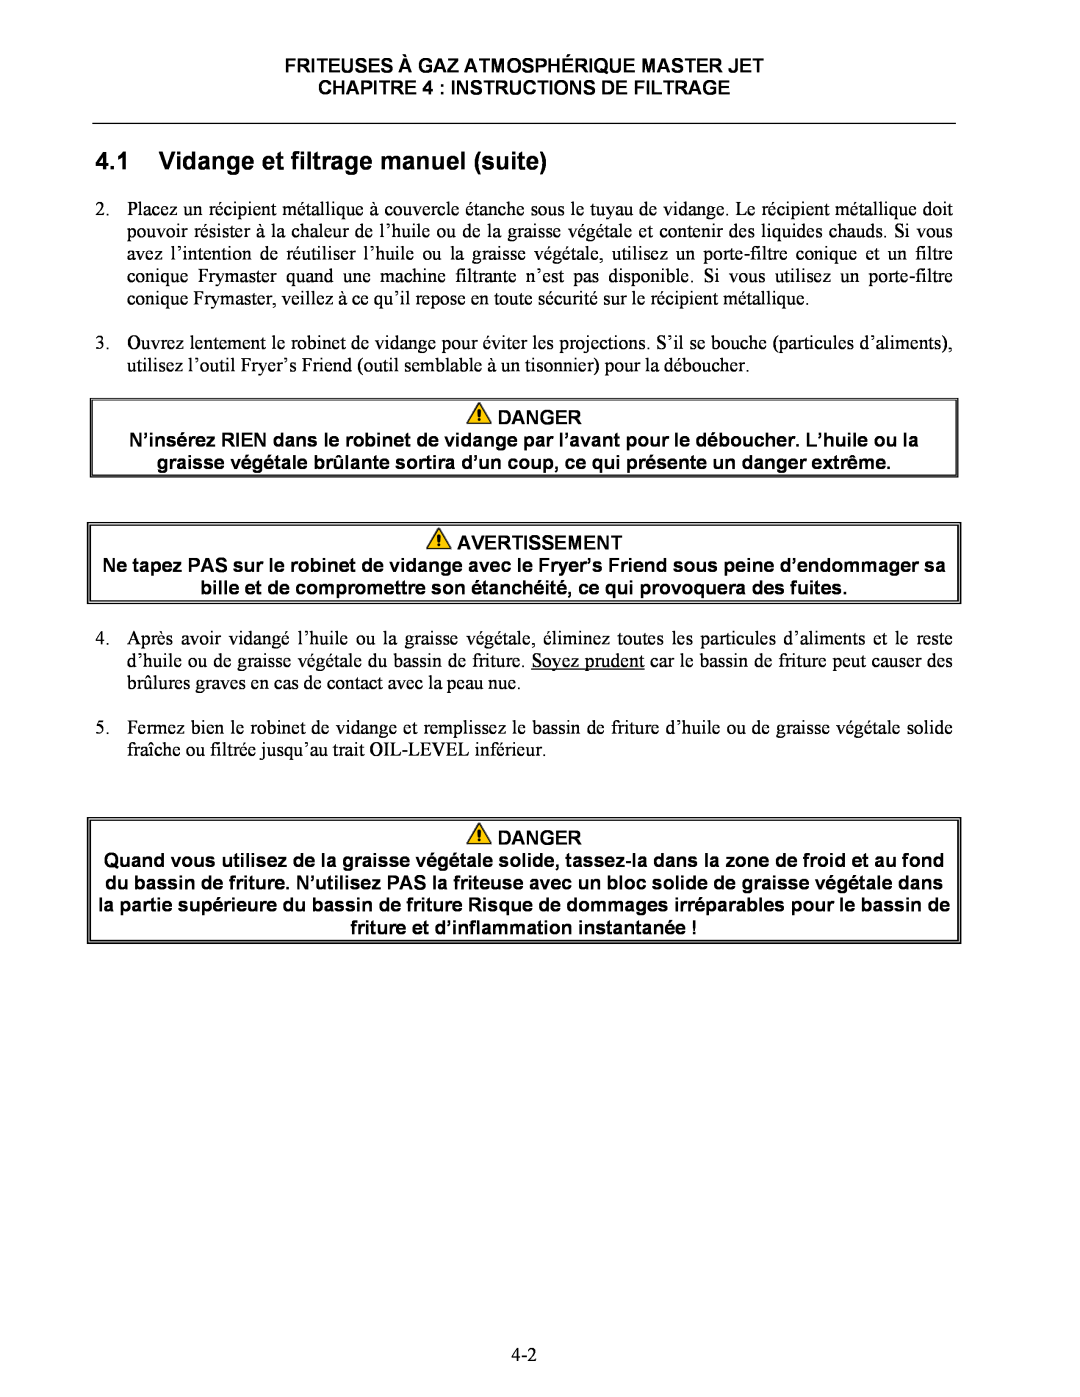 Frymaster CF manual Vidange et filtrage manuel suite, CHAPITRE 4 INSTRUCTIONS DE FILTRAGE, Danger, Avertissement 